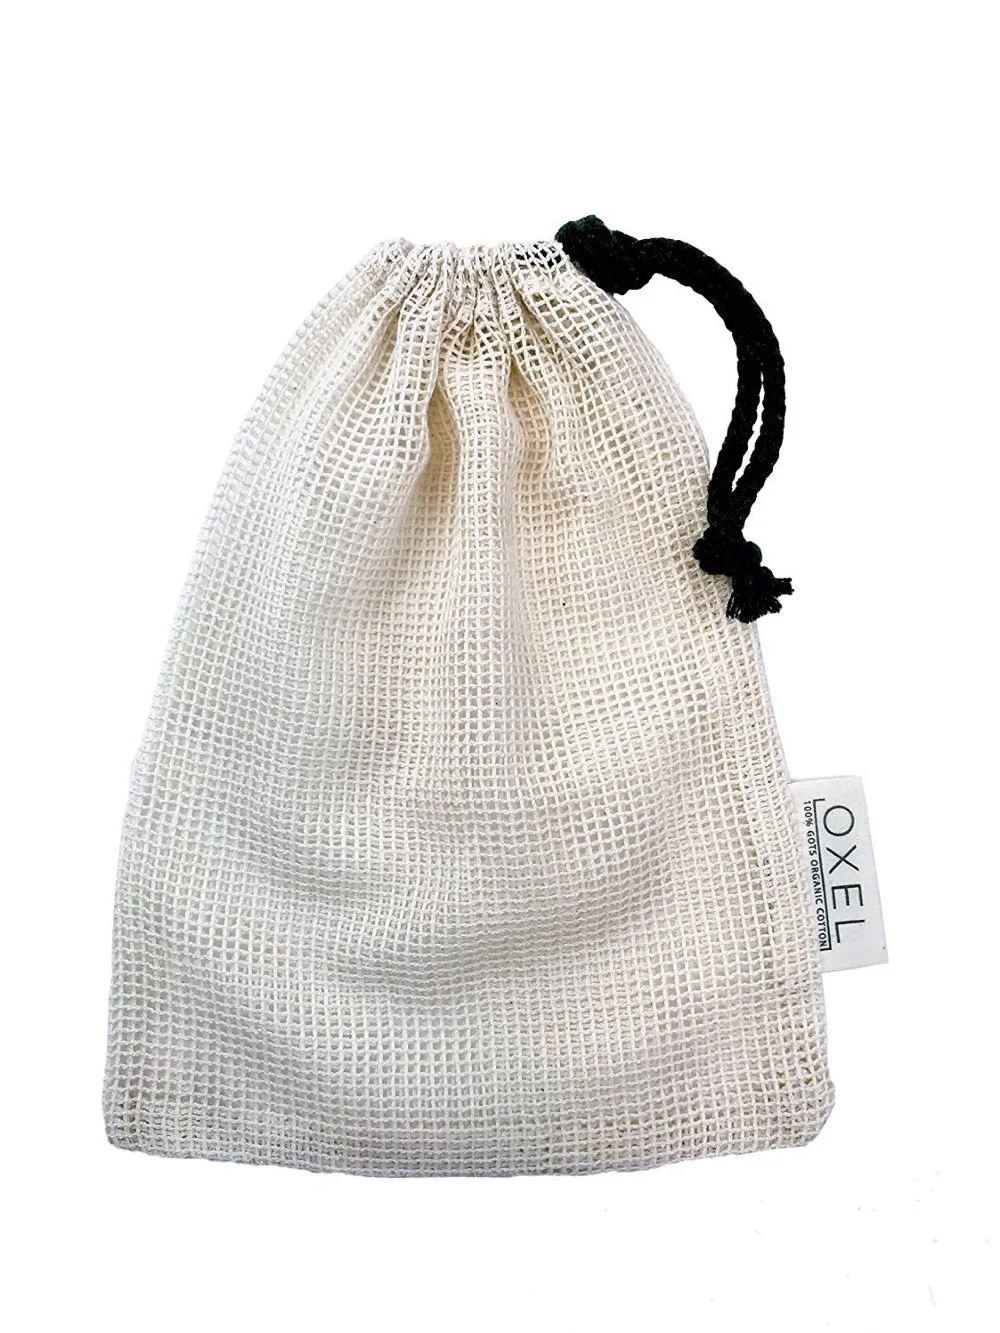 100% Cotton Mesh Drawstring Bag - Buy Eco-friendly 100% Cotton Mesh ...